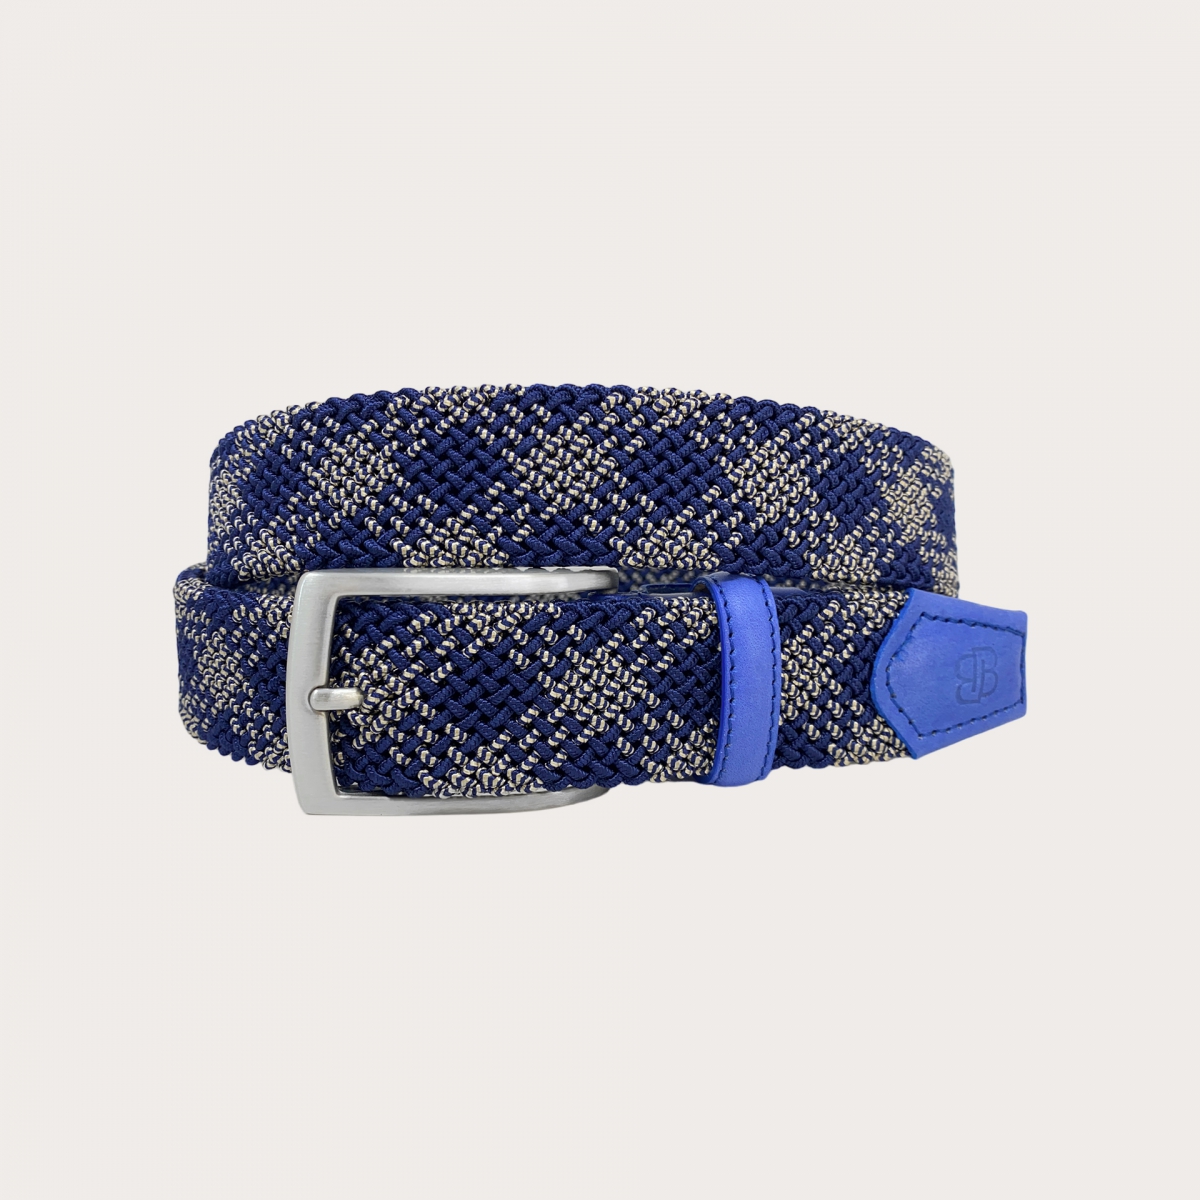 BRUCLE Elastic braided blue and beige belt, nickel free